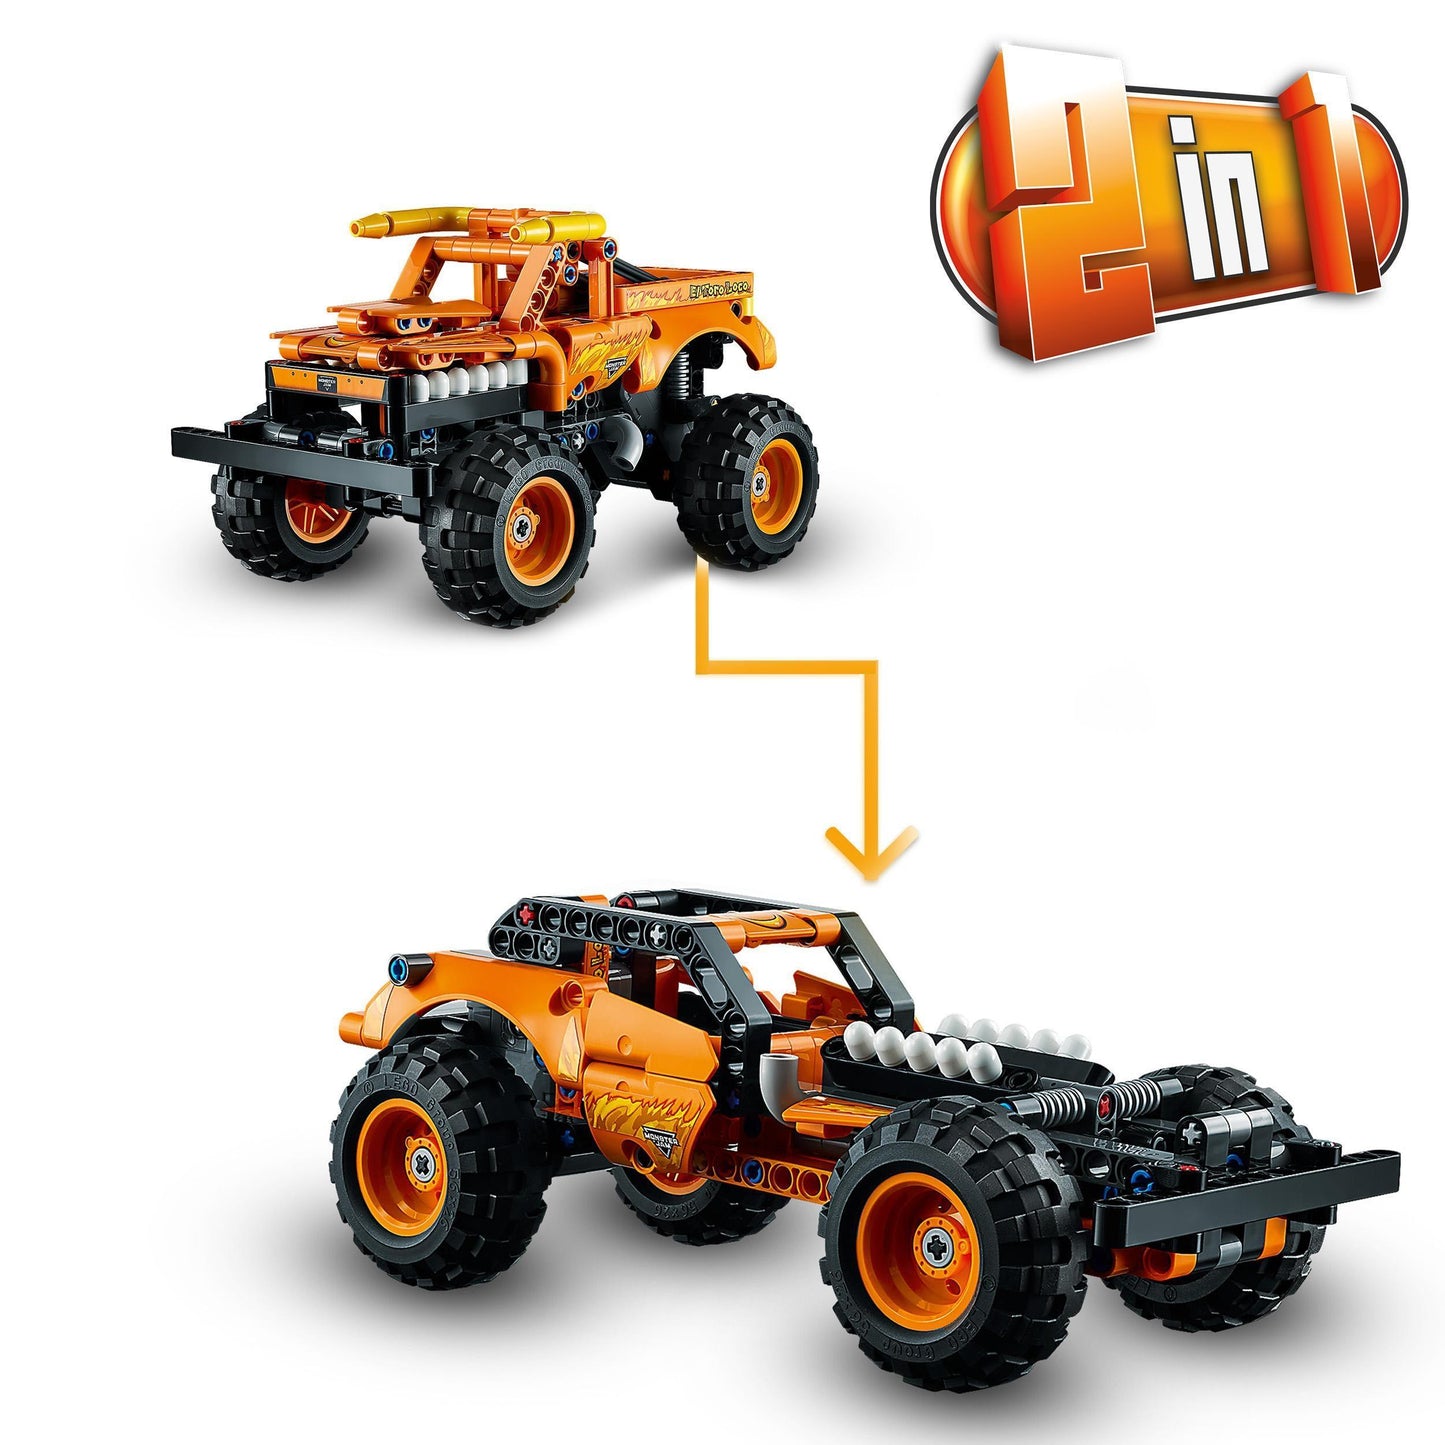 LEGO Monster Jam Truck El Toro Loco 42135 Technic | 2TTOYS ✓ Official shop<br>